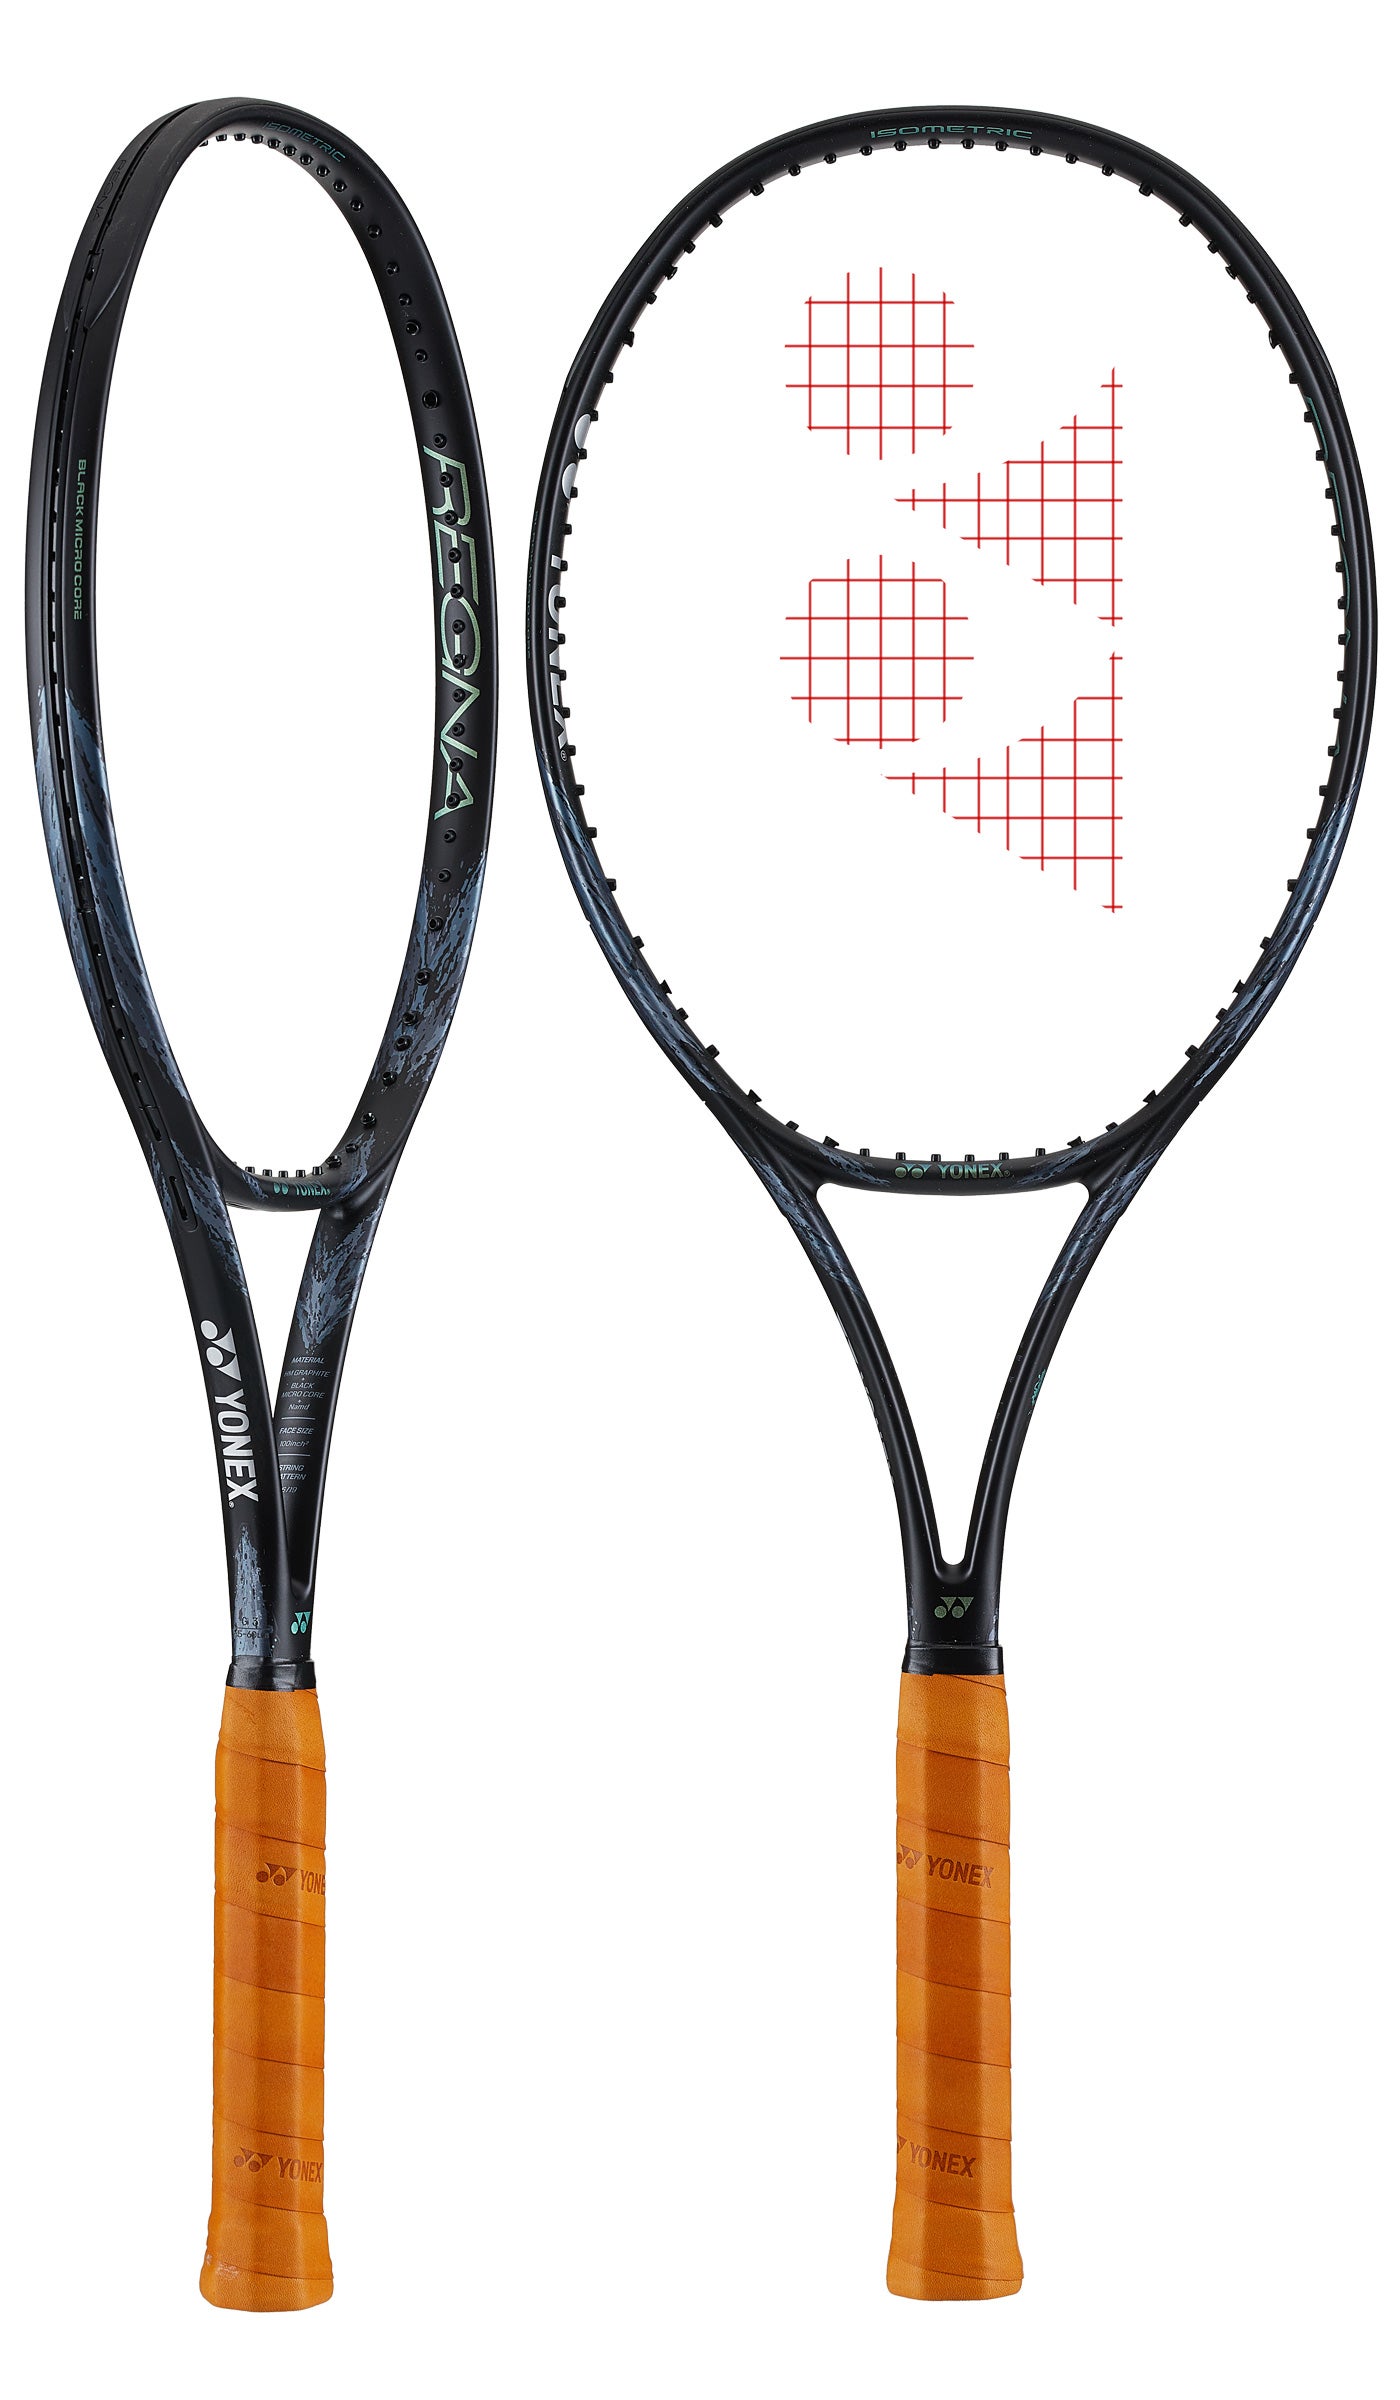 Auth Dealer HEAD LYNX 17g SET Anthracite tennis string racket racquet 